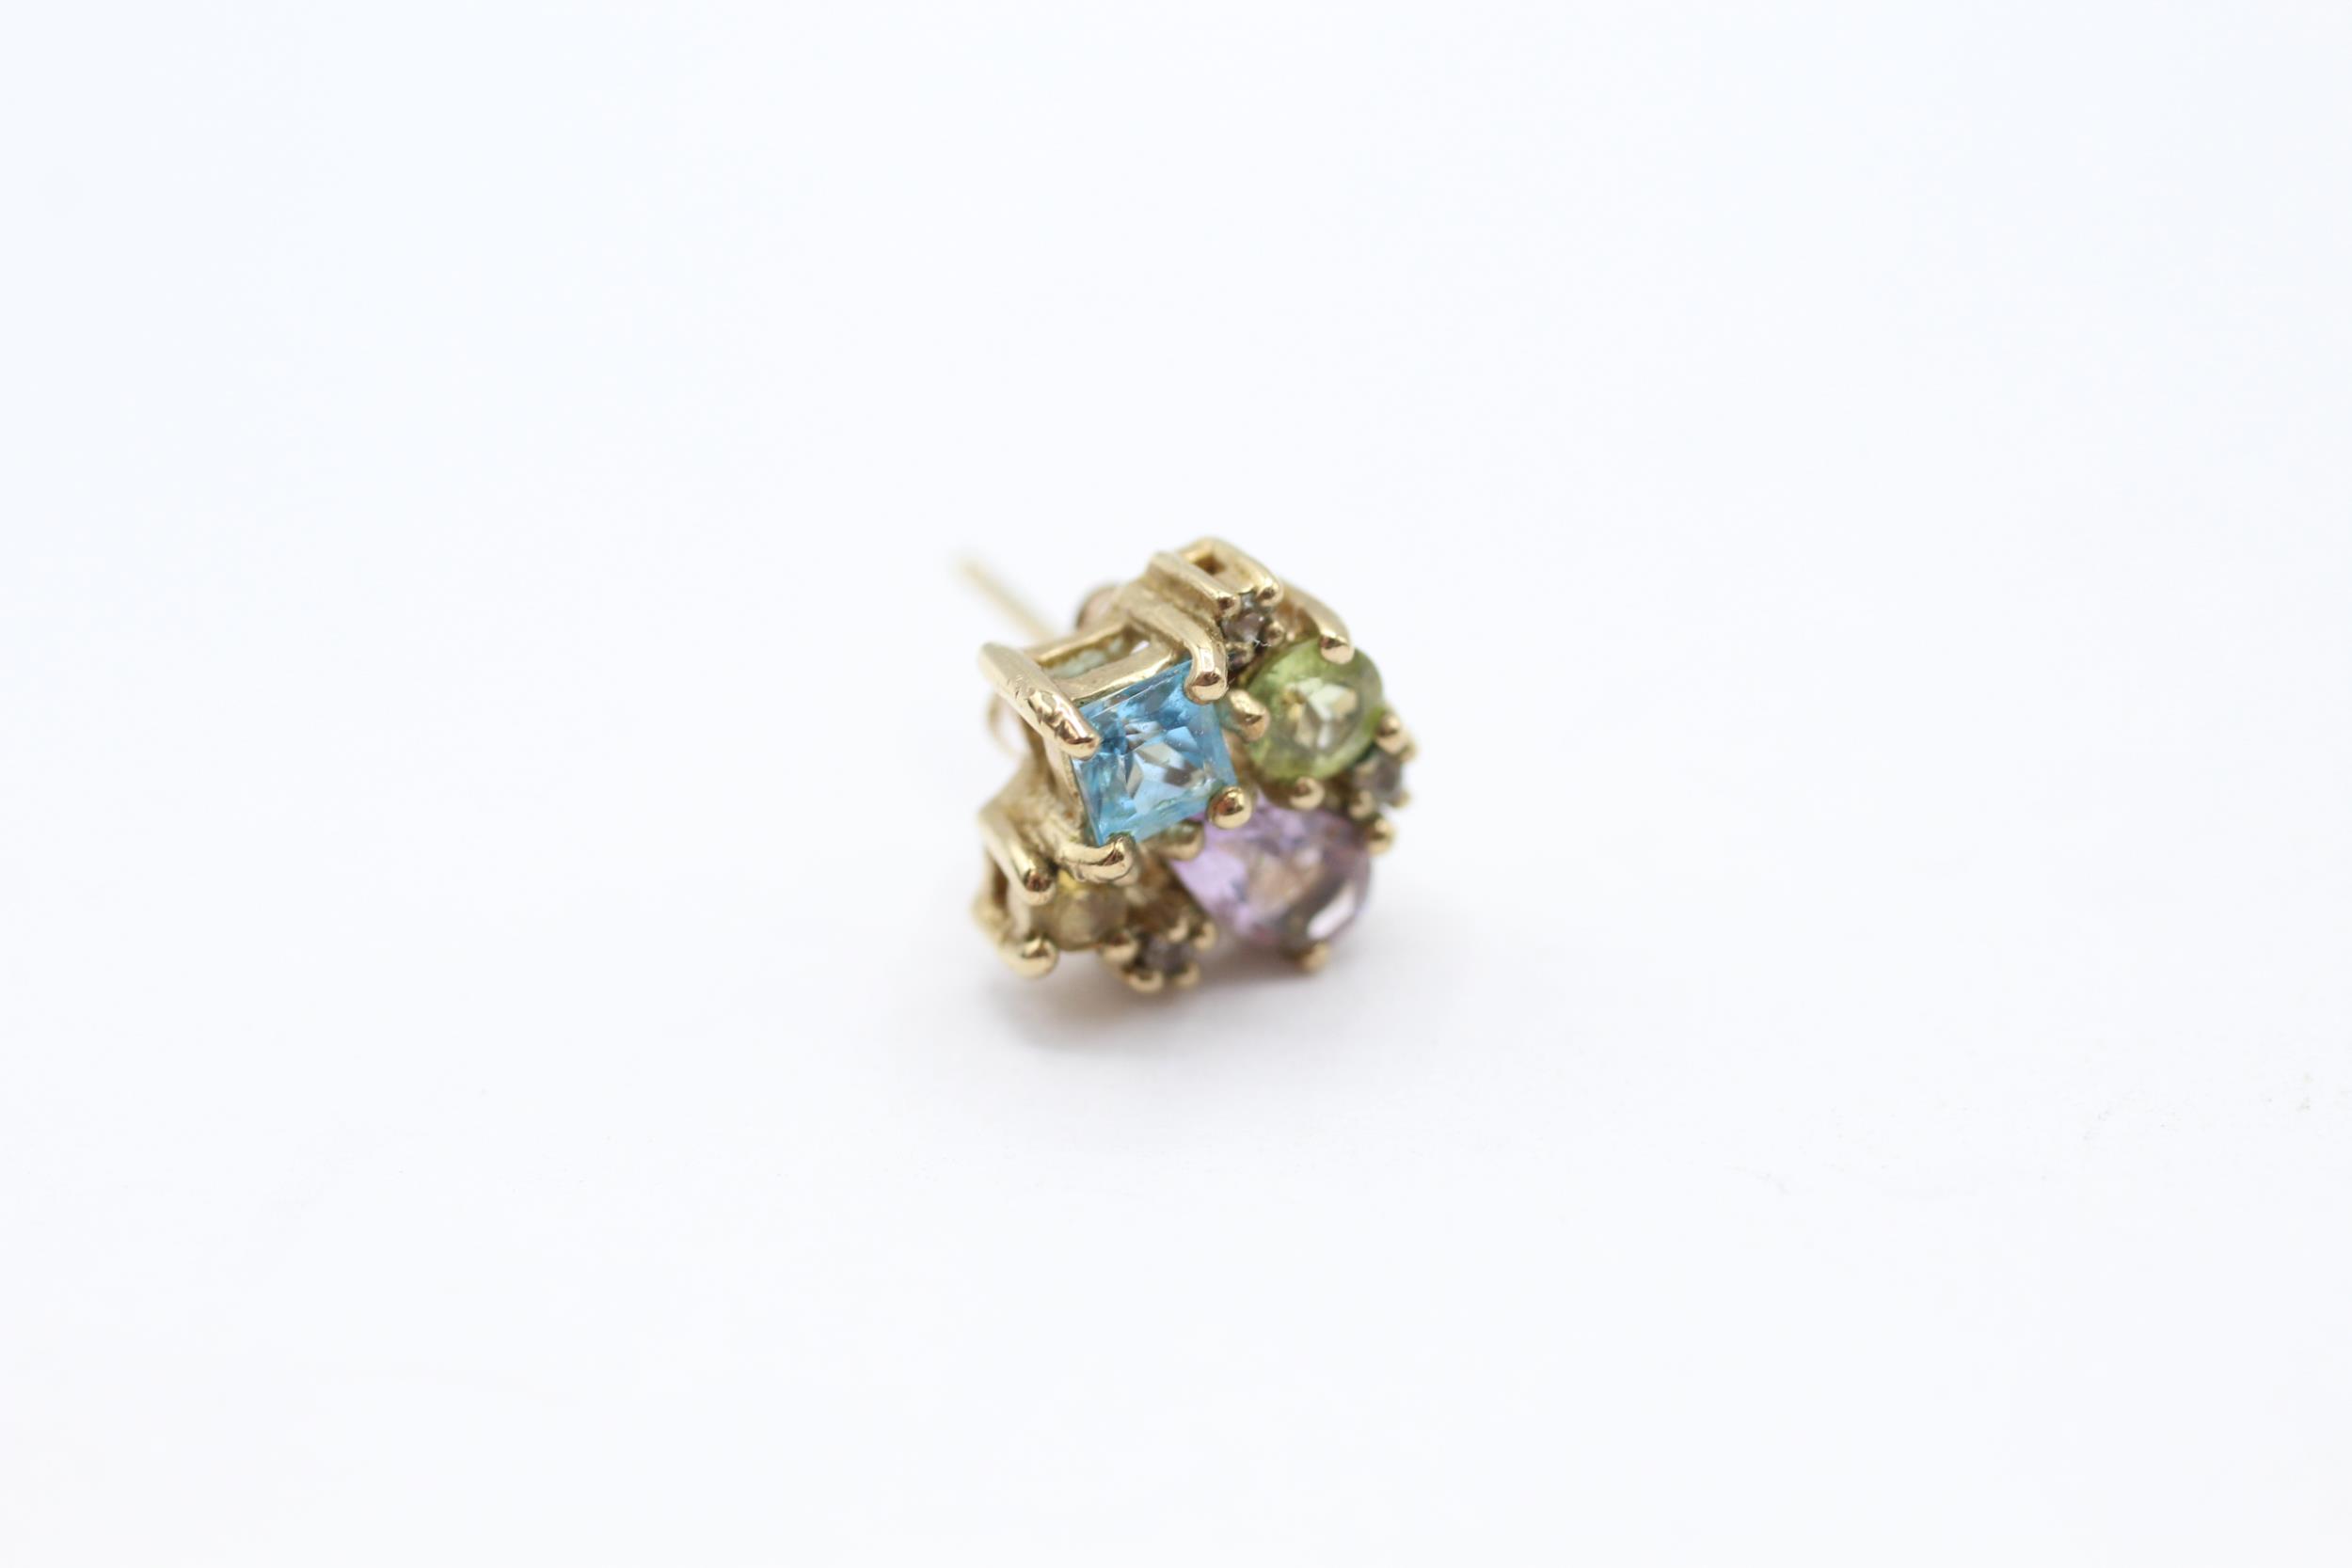 9ct gold multi gemstone cluster stud earrings, gemstones including: amethyst, topaz, citrine, - Image 2 of 4